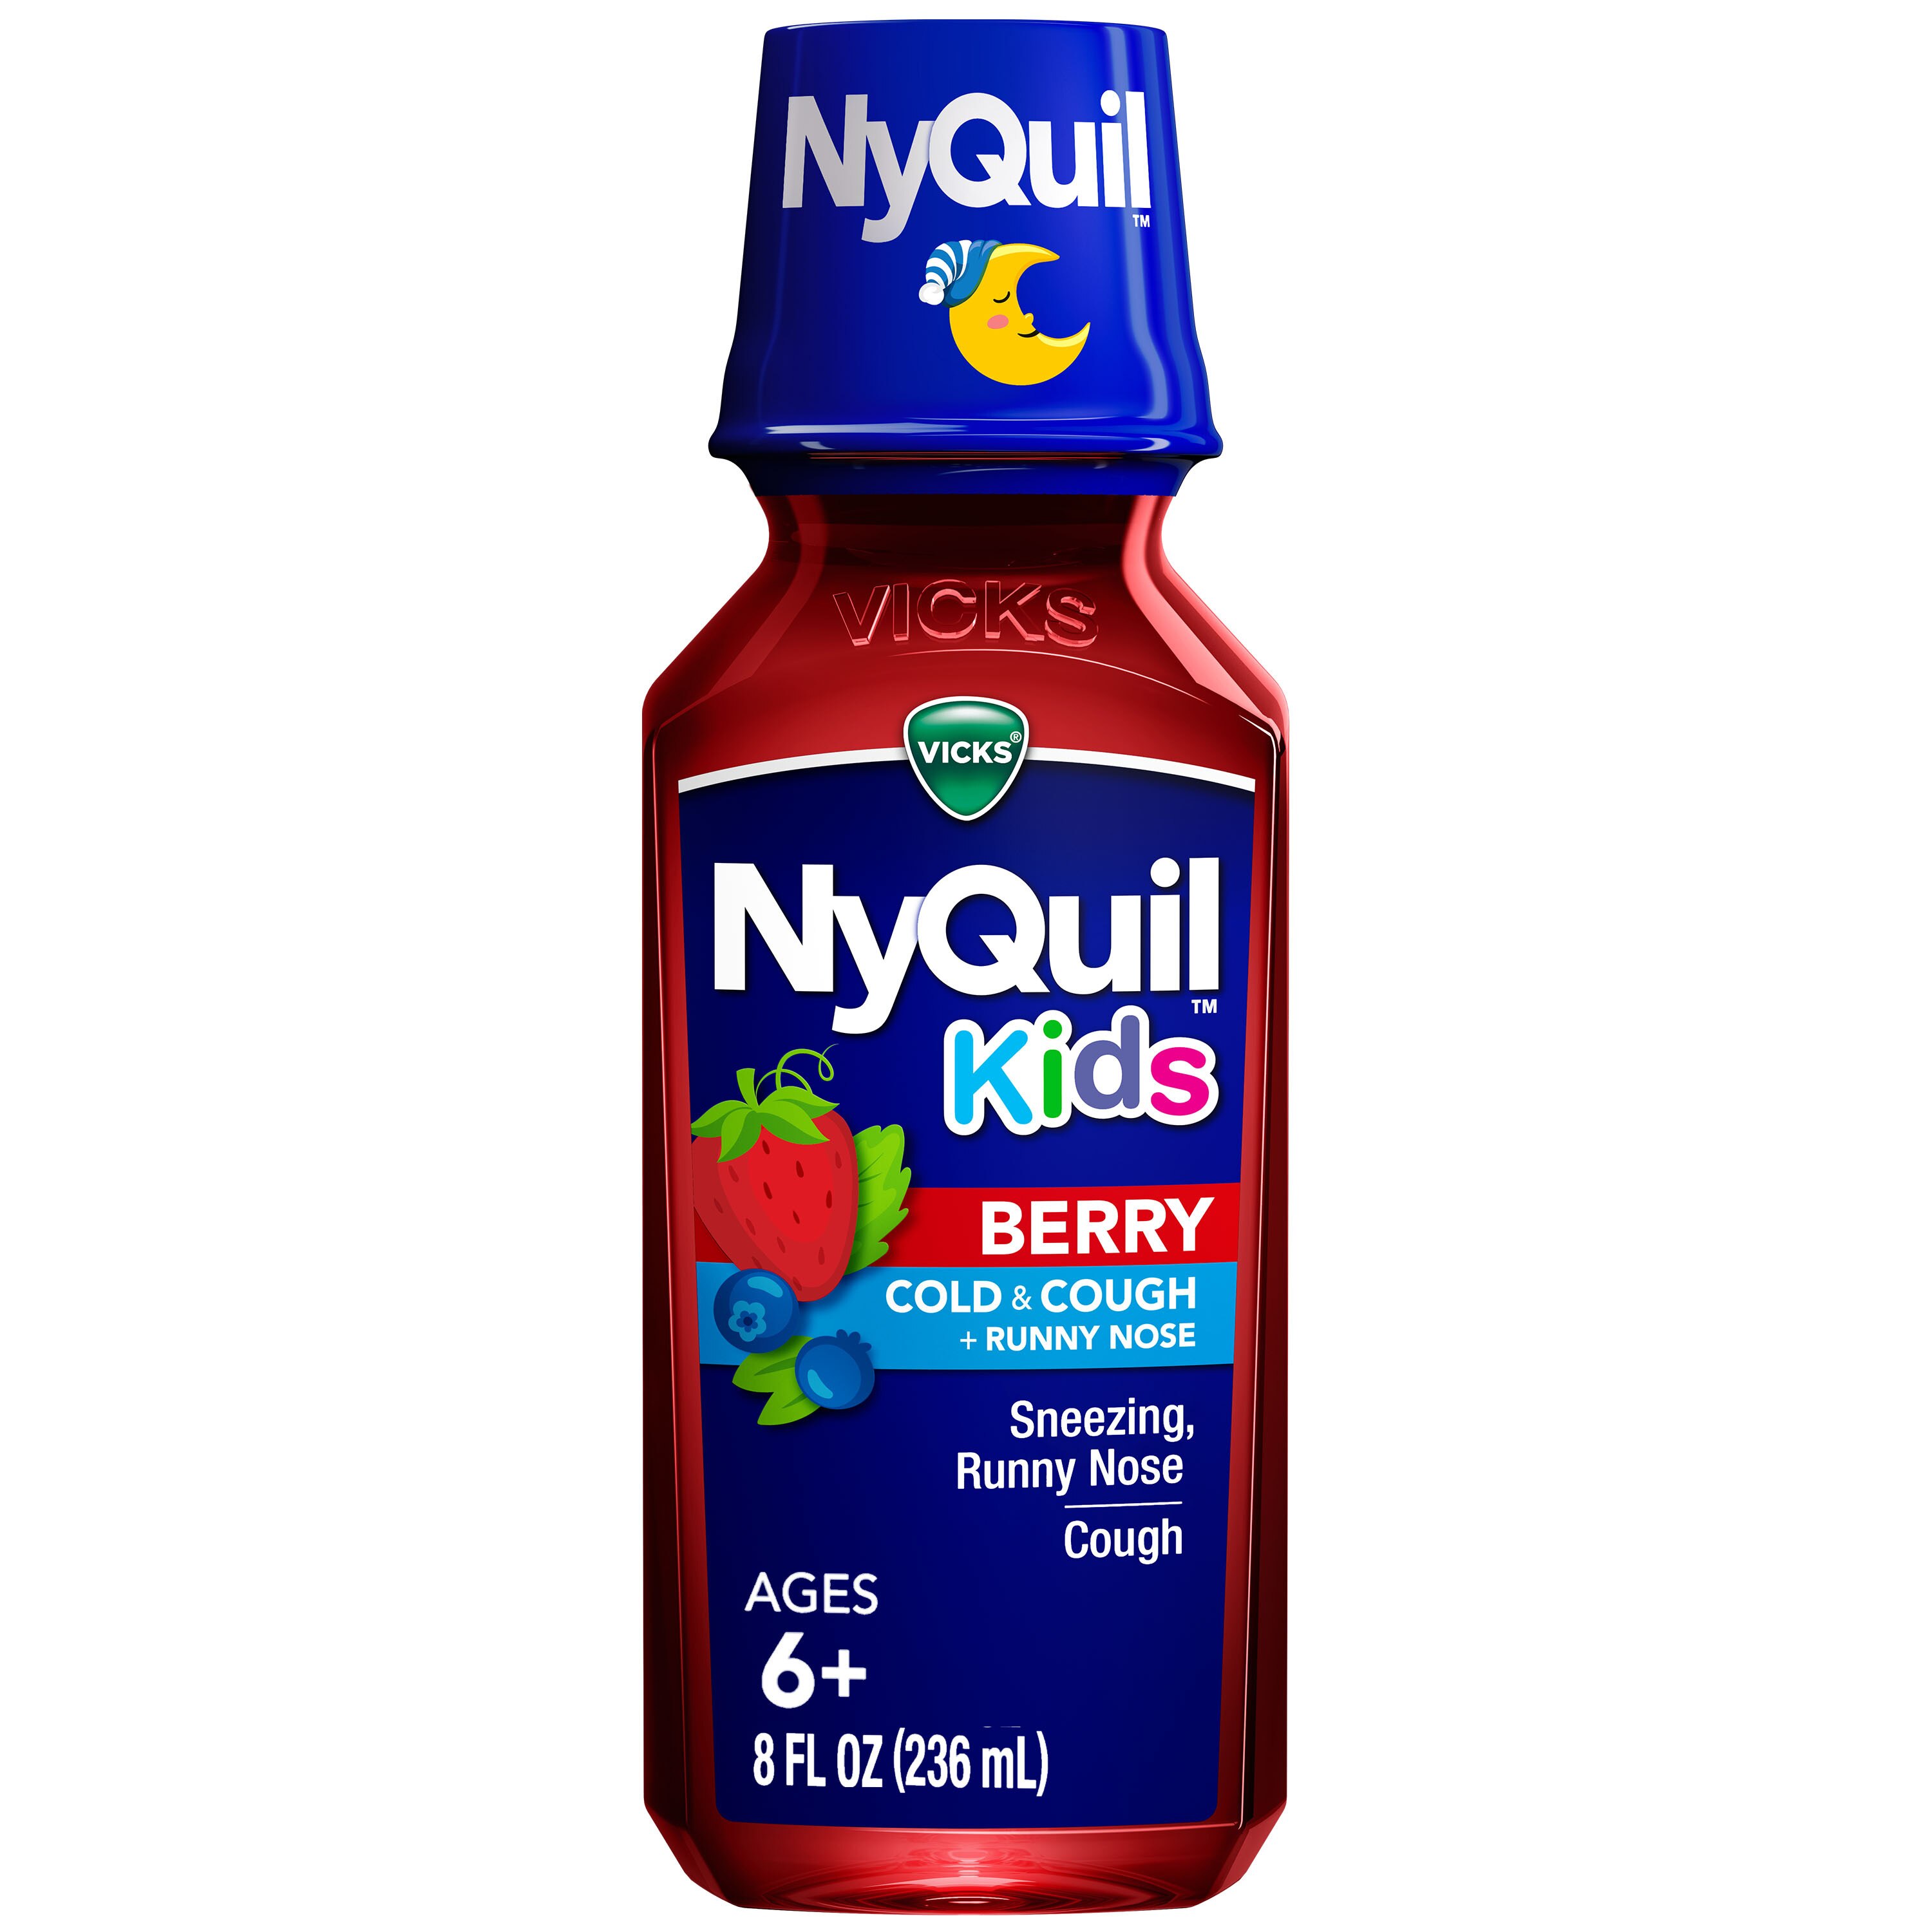 Vicks Children's NyQuil, Nighttime Cold & Cough Multi-Symptom Relief, Berry, 8 FL Oz - 8 Oz , CVS